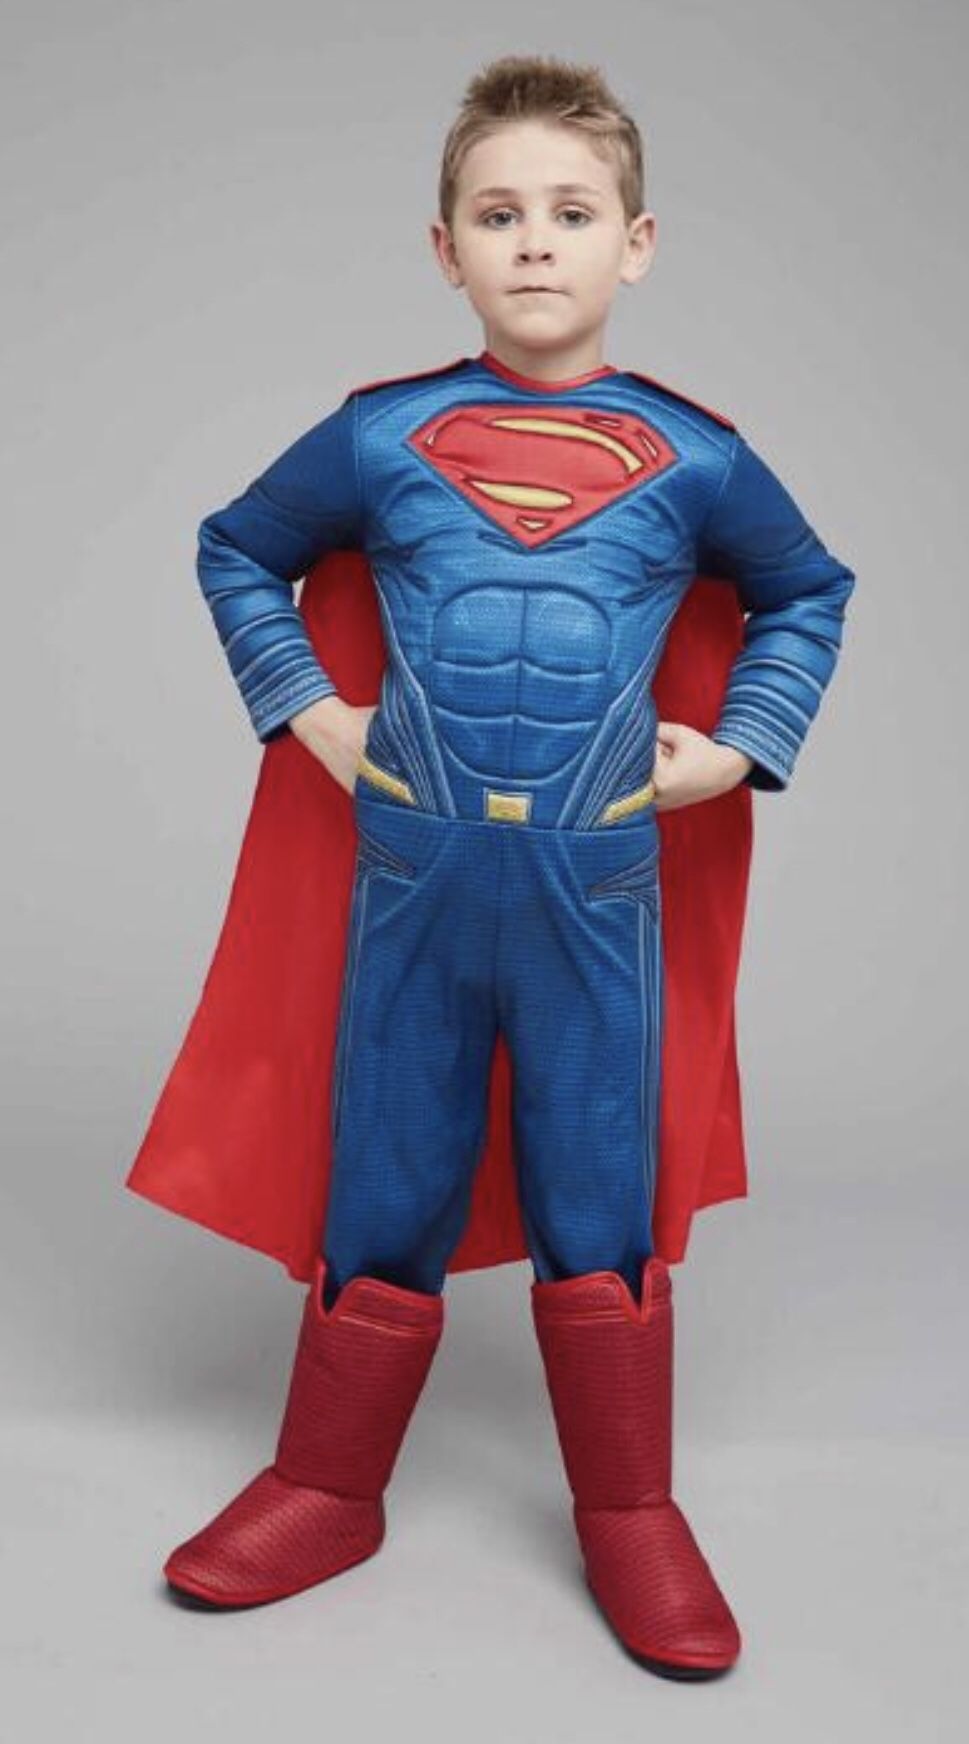 Superman Halloween costume